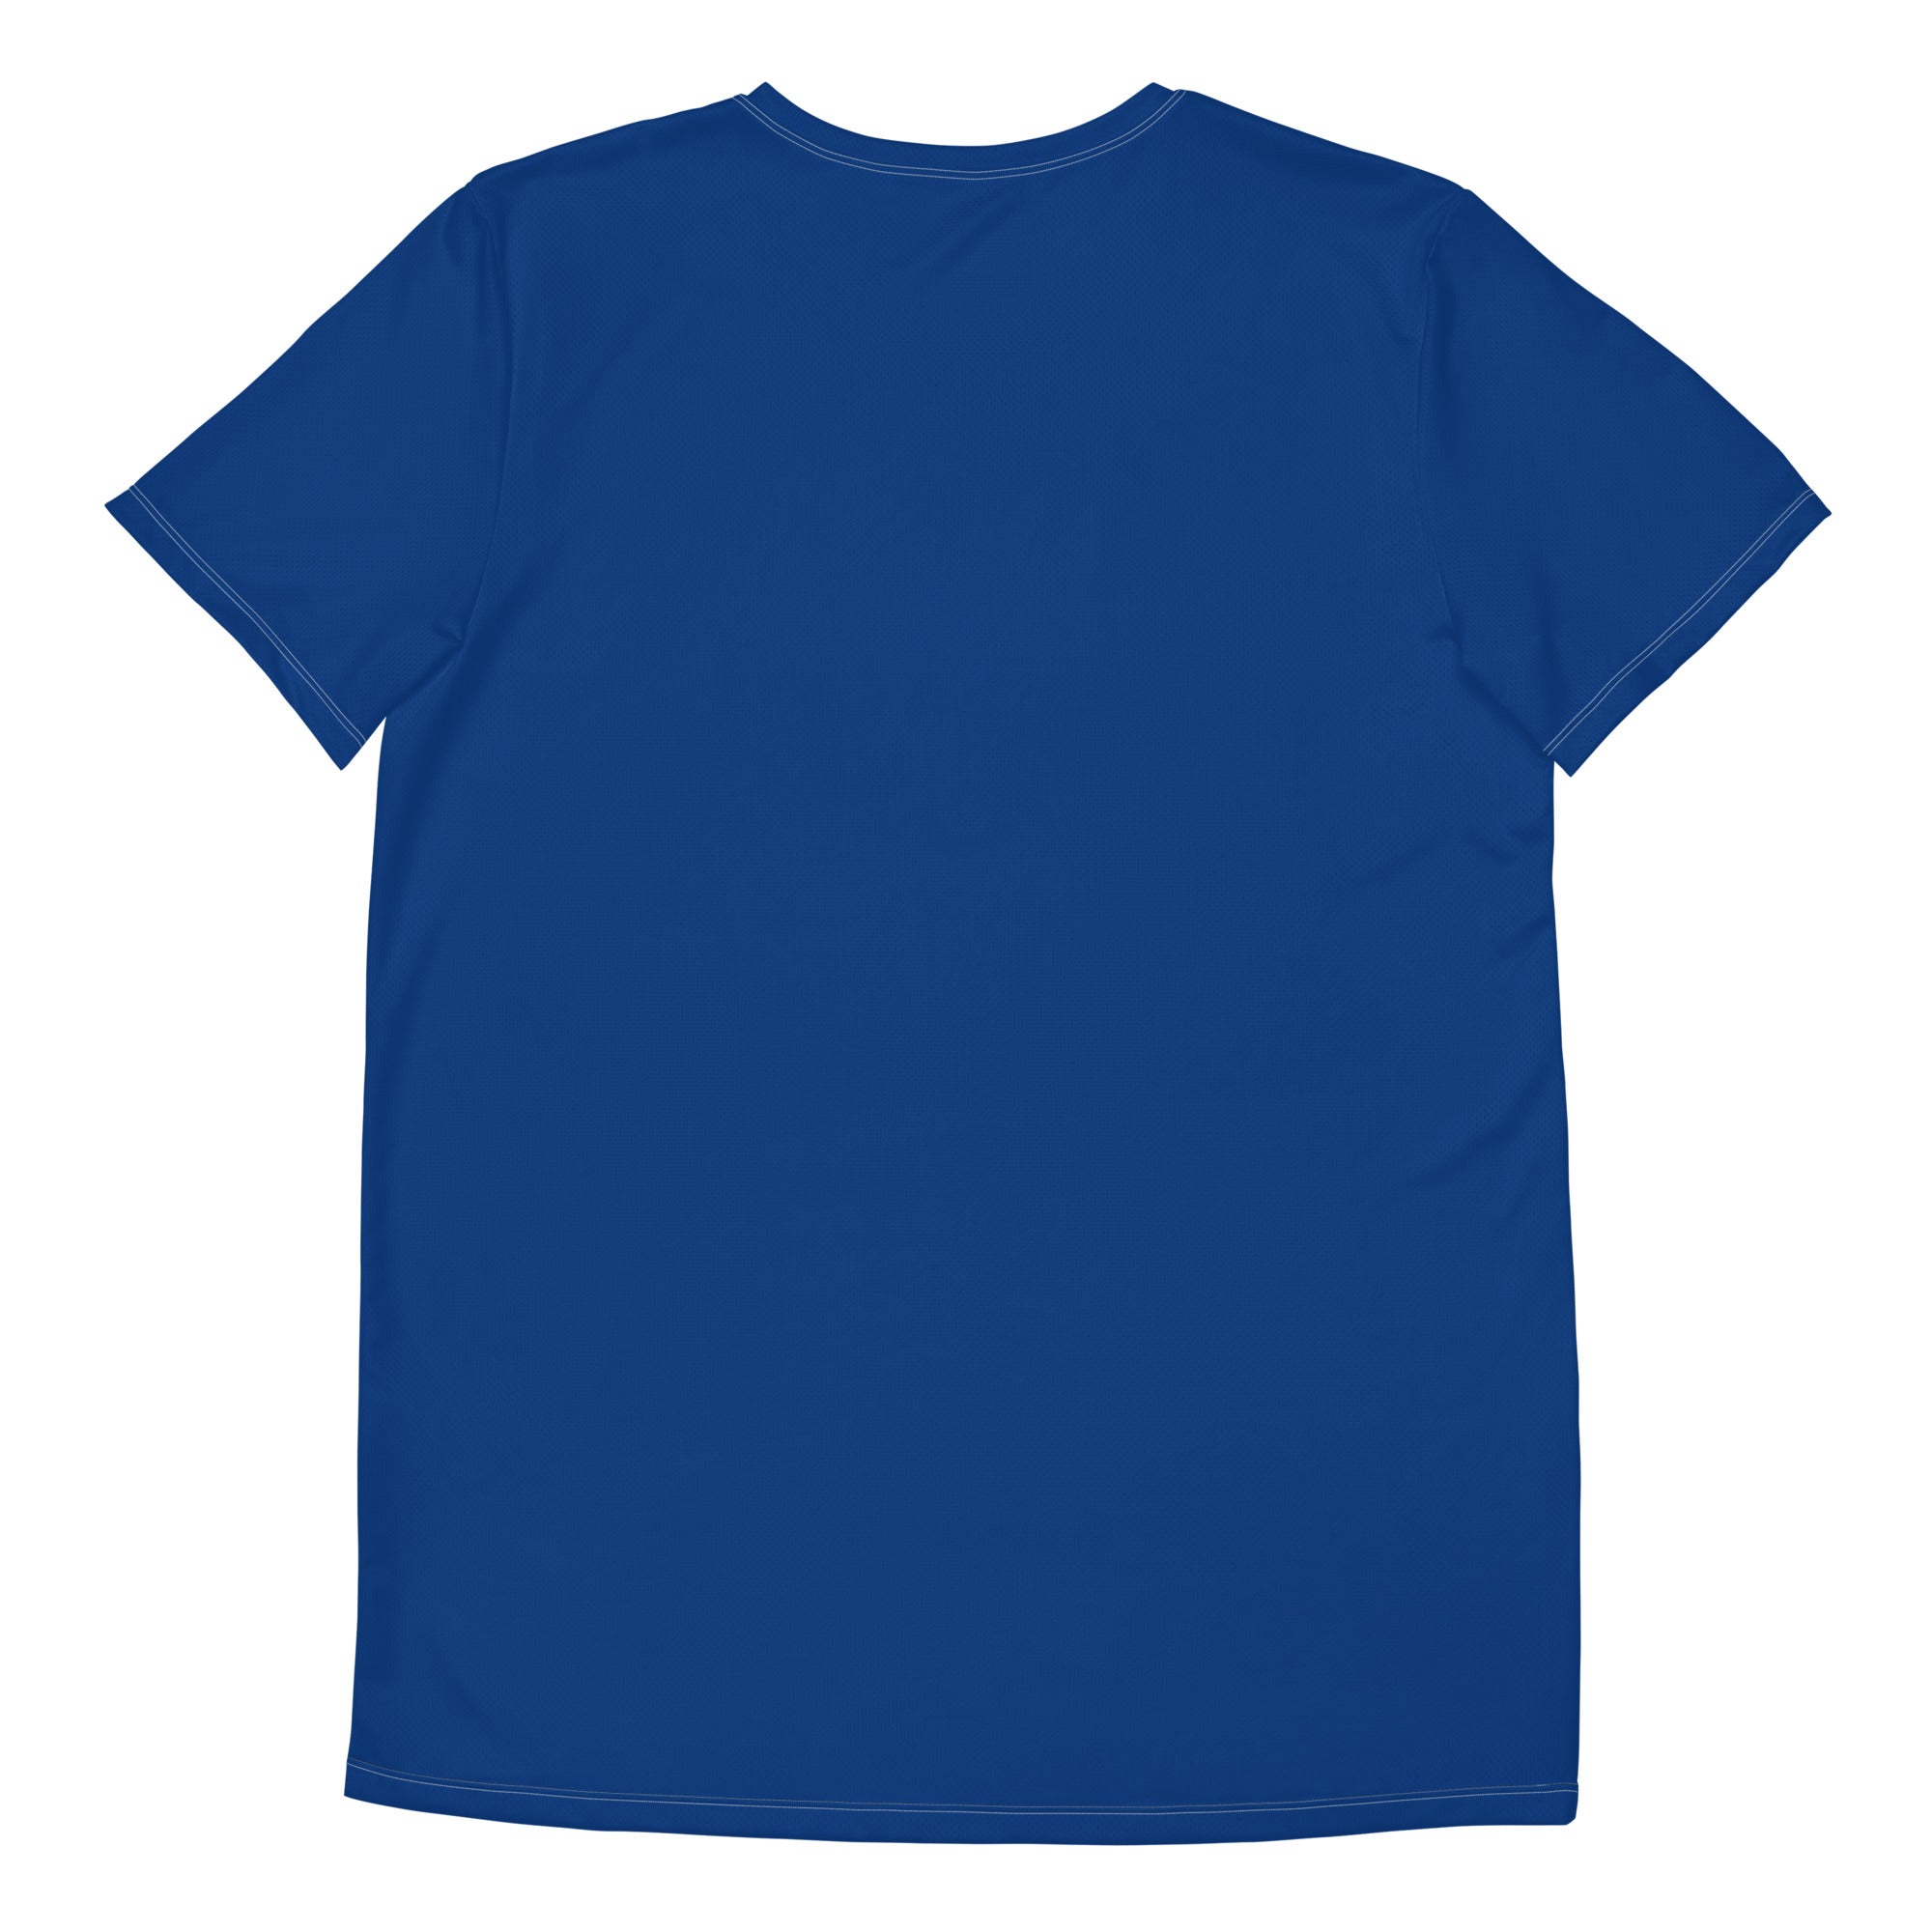 IEW Performance Short Sleeve Men's Athletic T-shirt